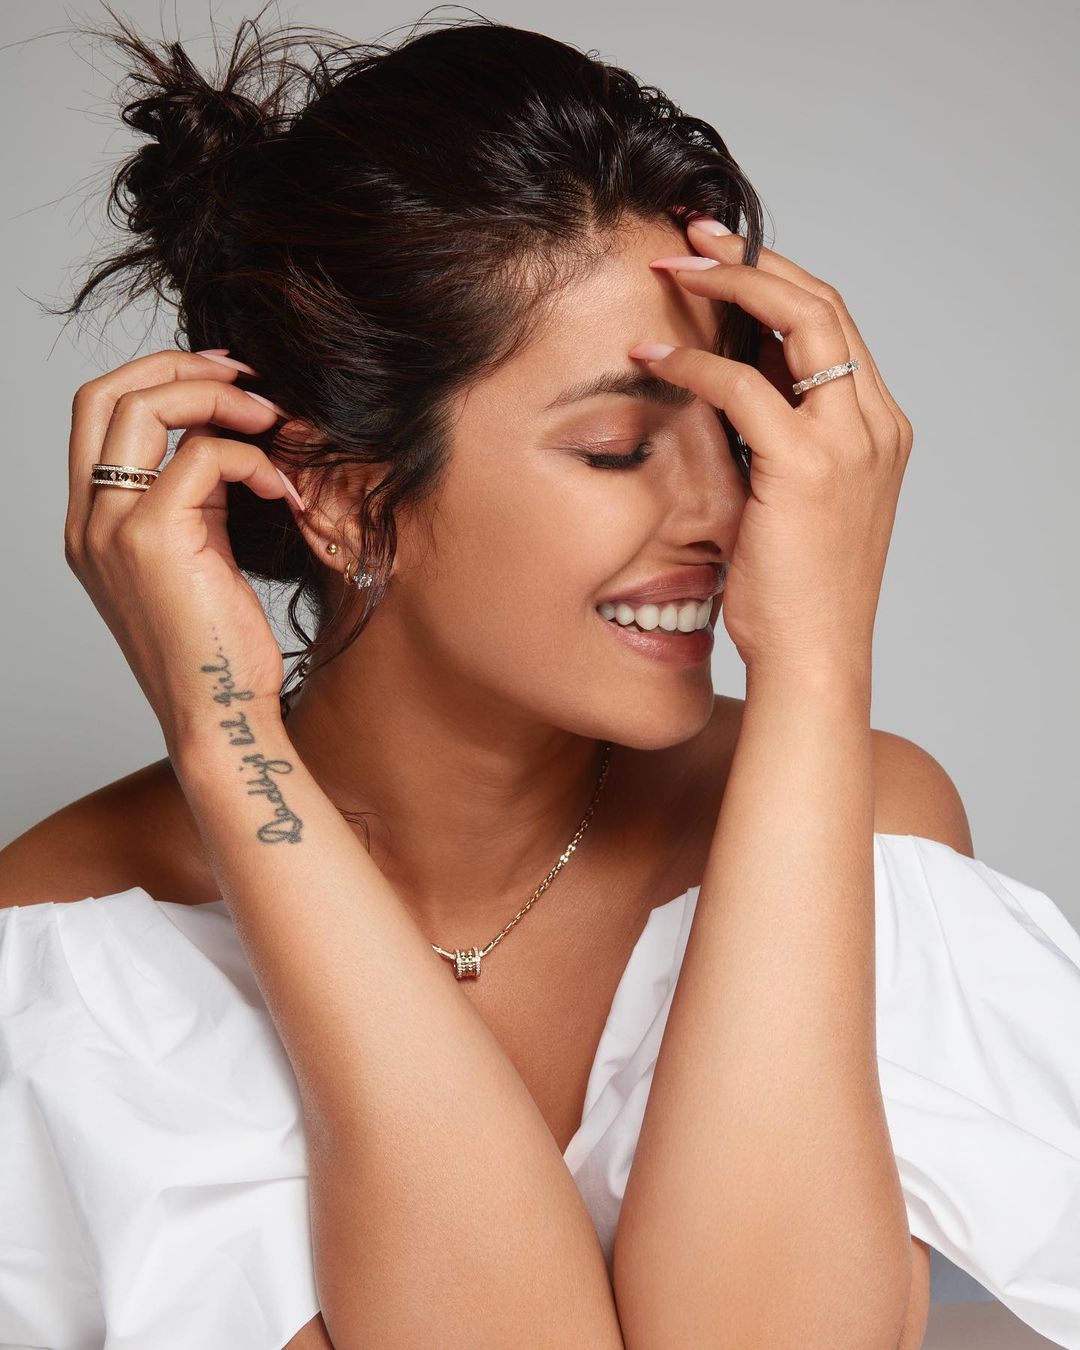 The Meaning of Rashmika Mandannas Tattoo on Her Right Wrist